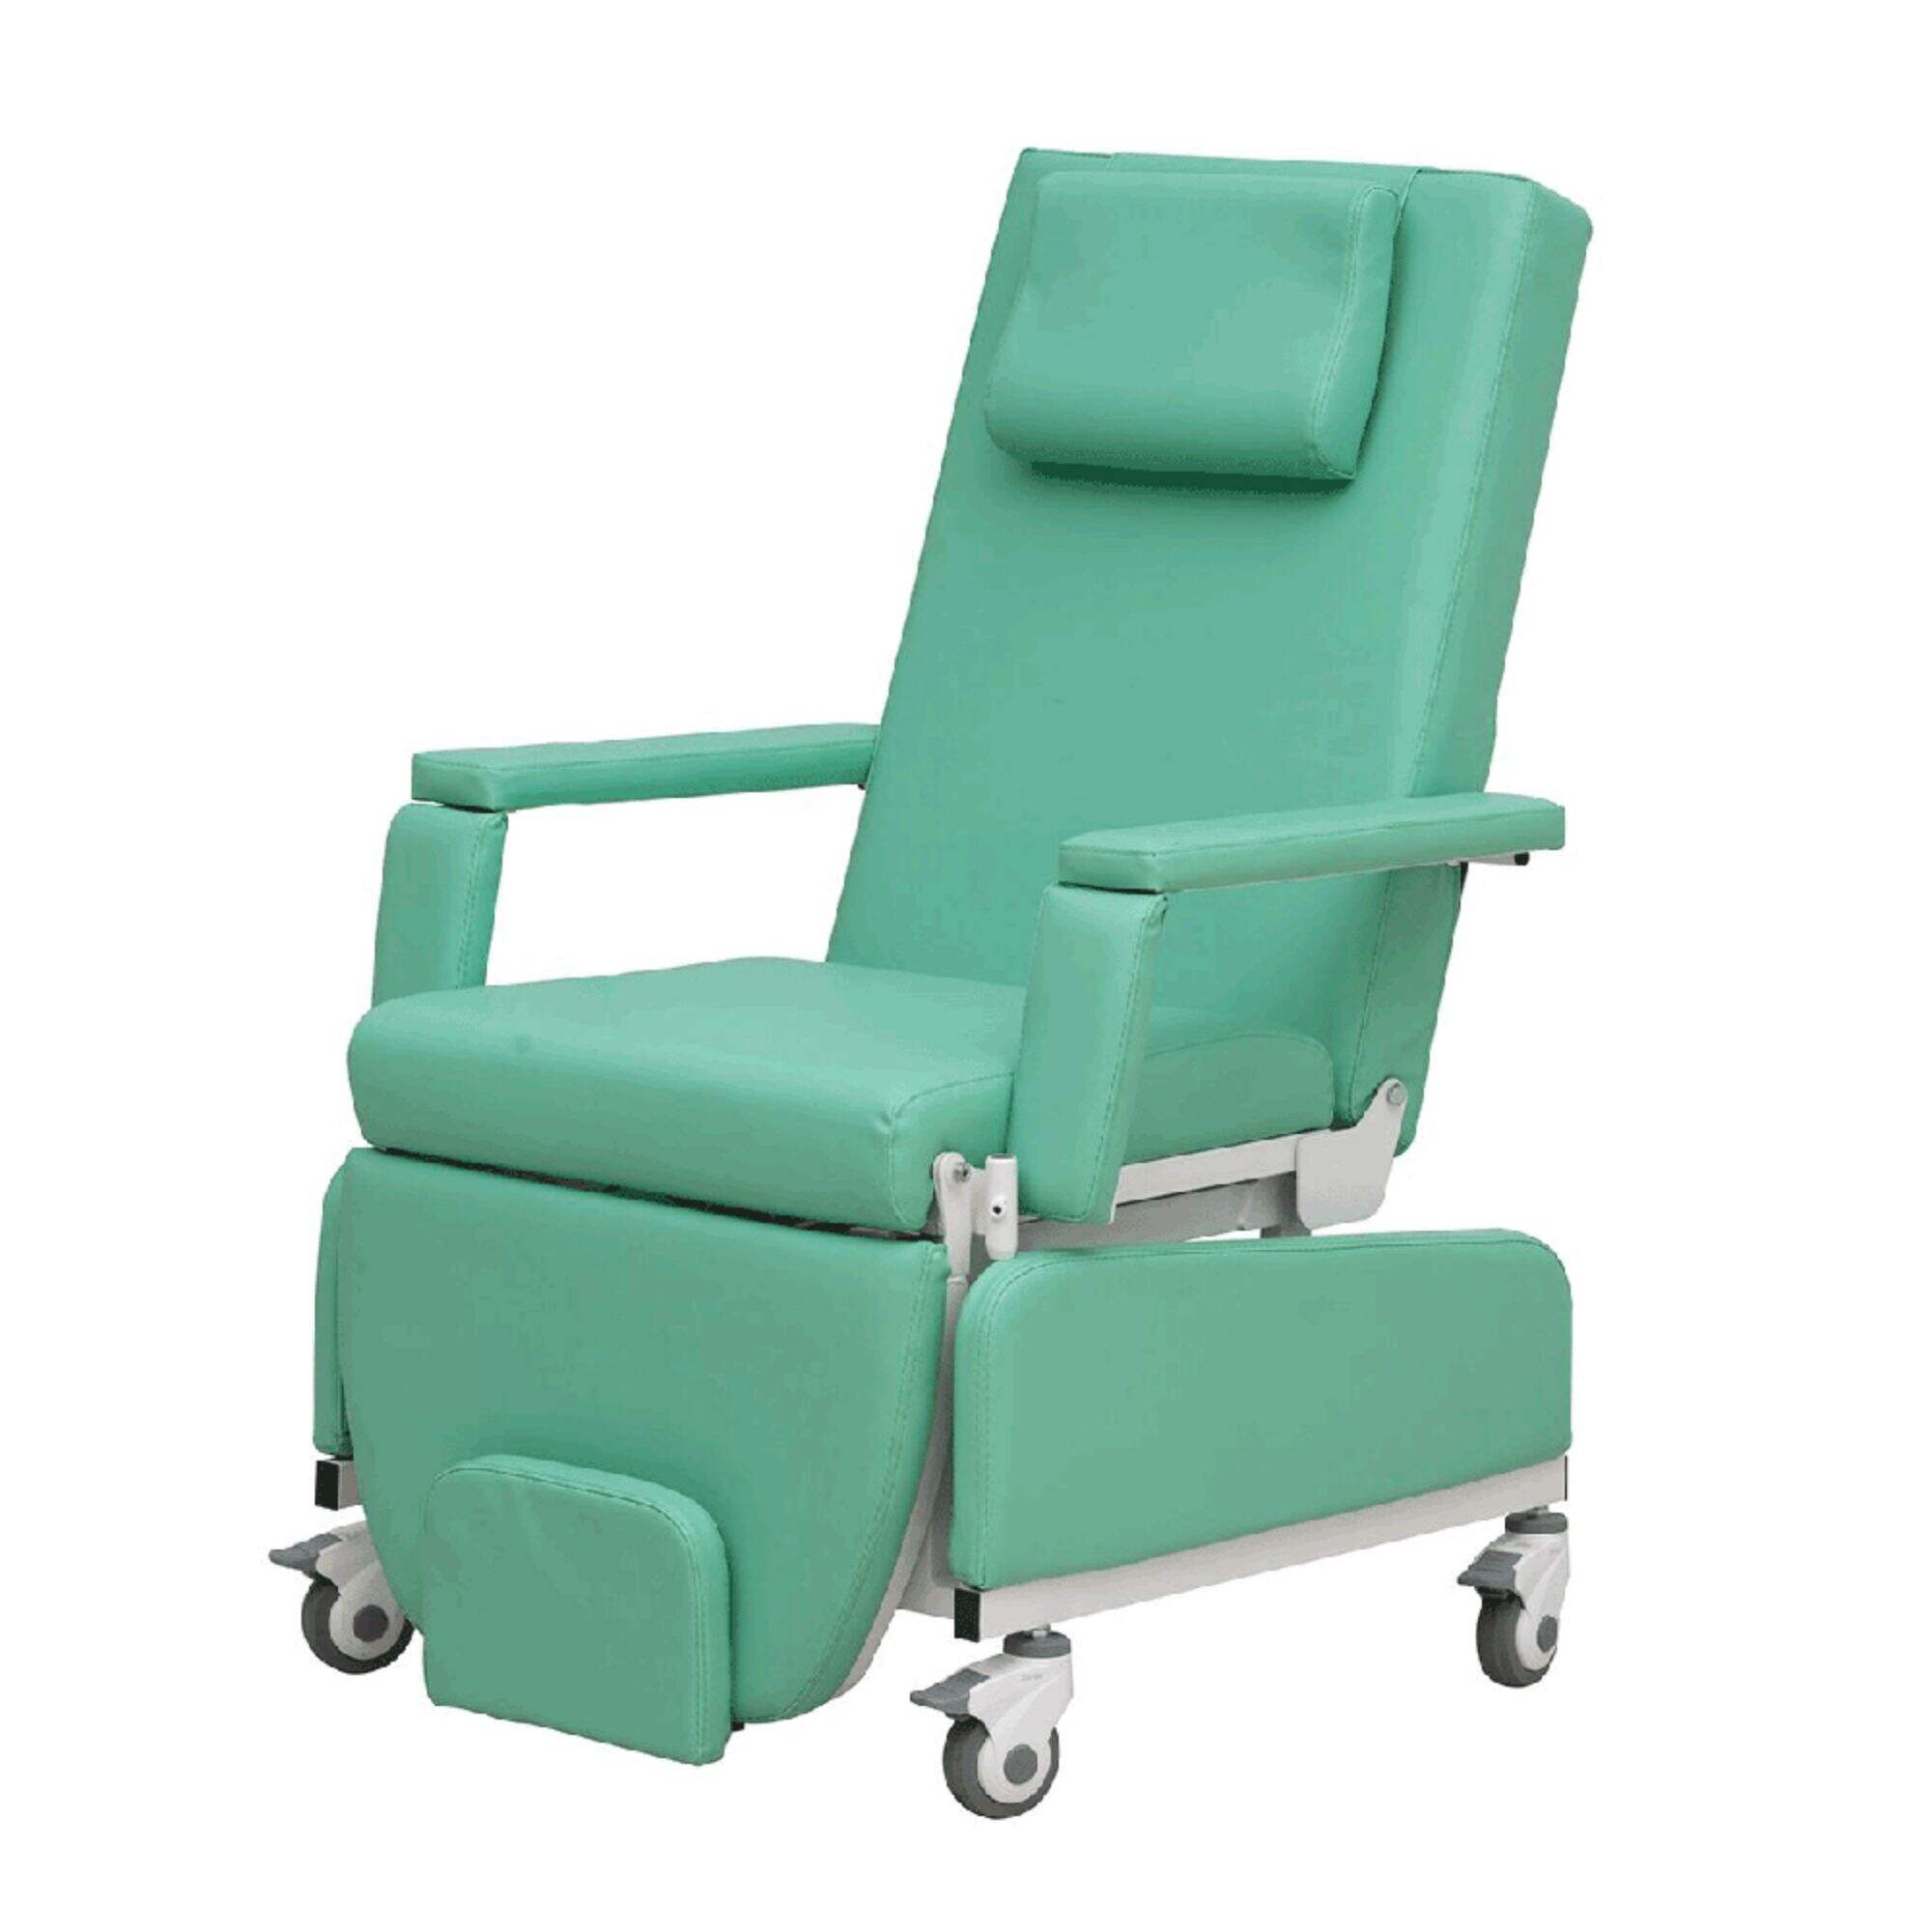 YFY-M02 Manual Dialysis Chair